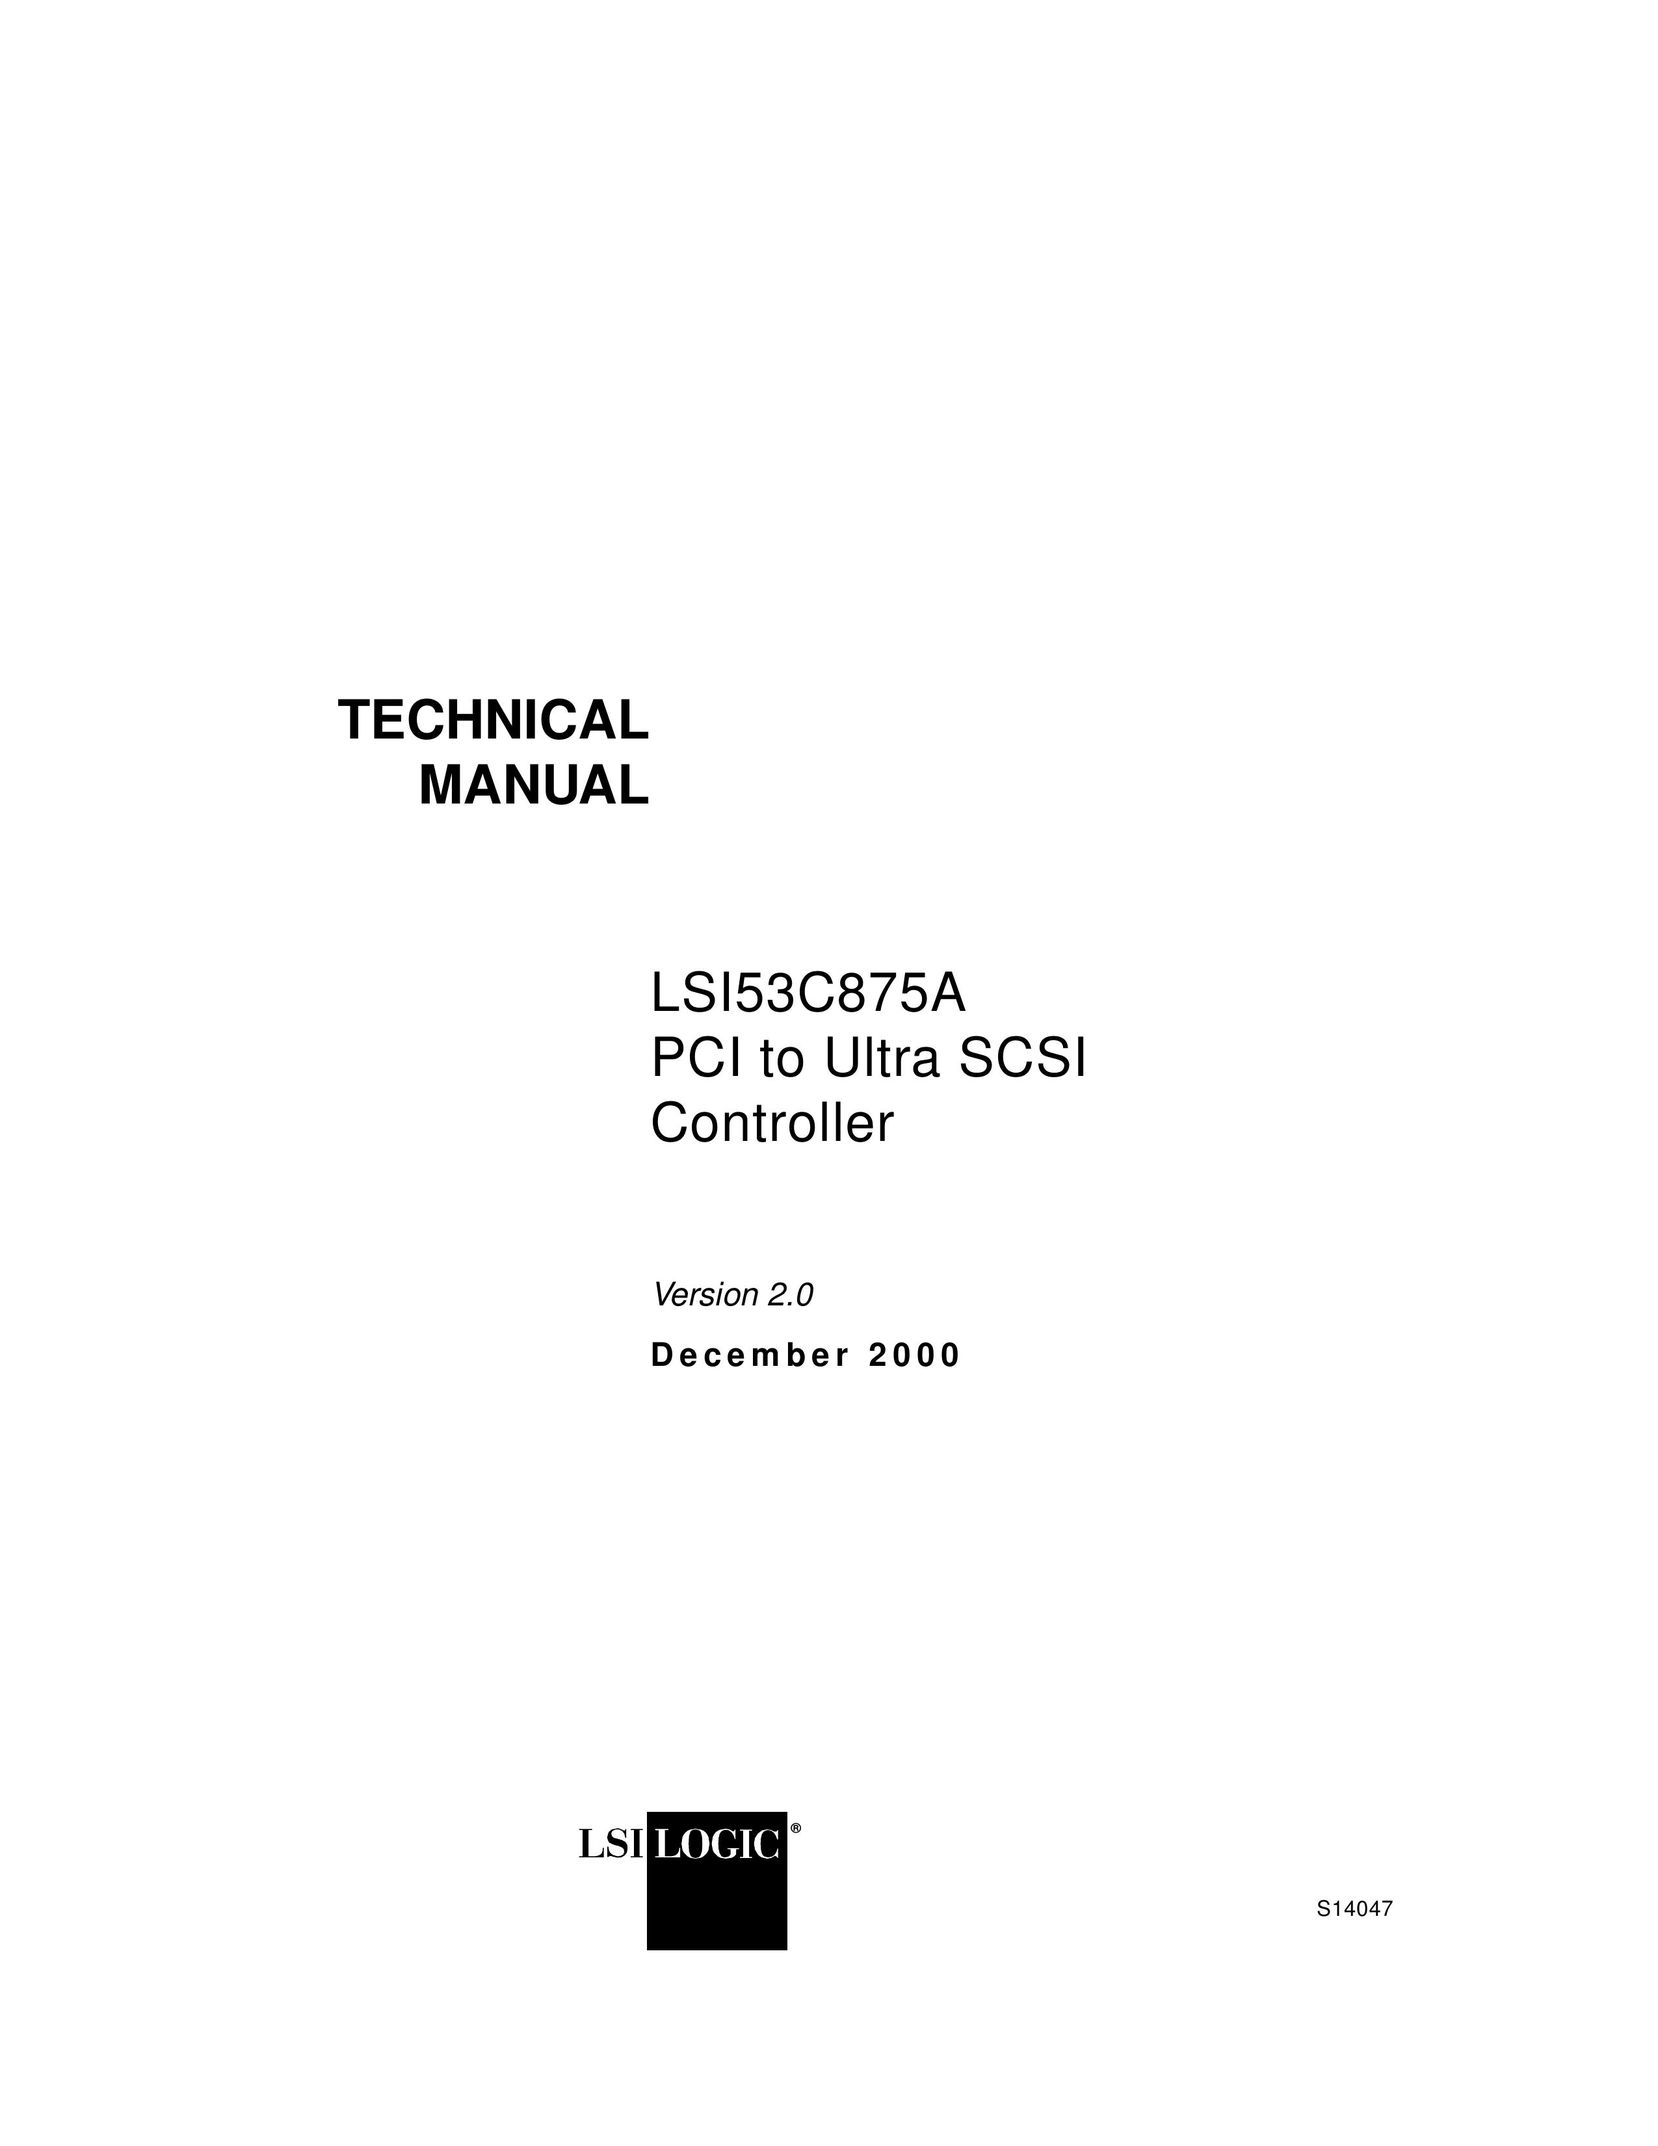 LSI 53C875A Computer Hardware User Manual